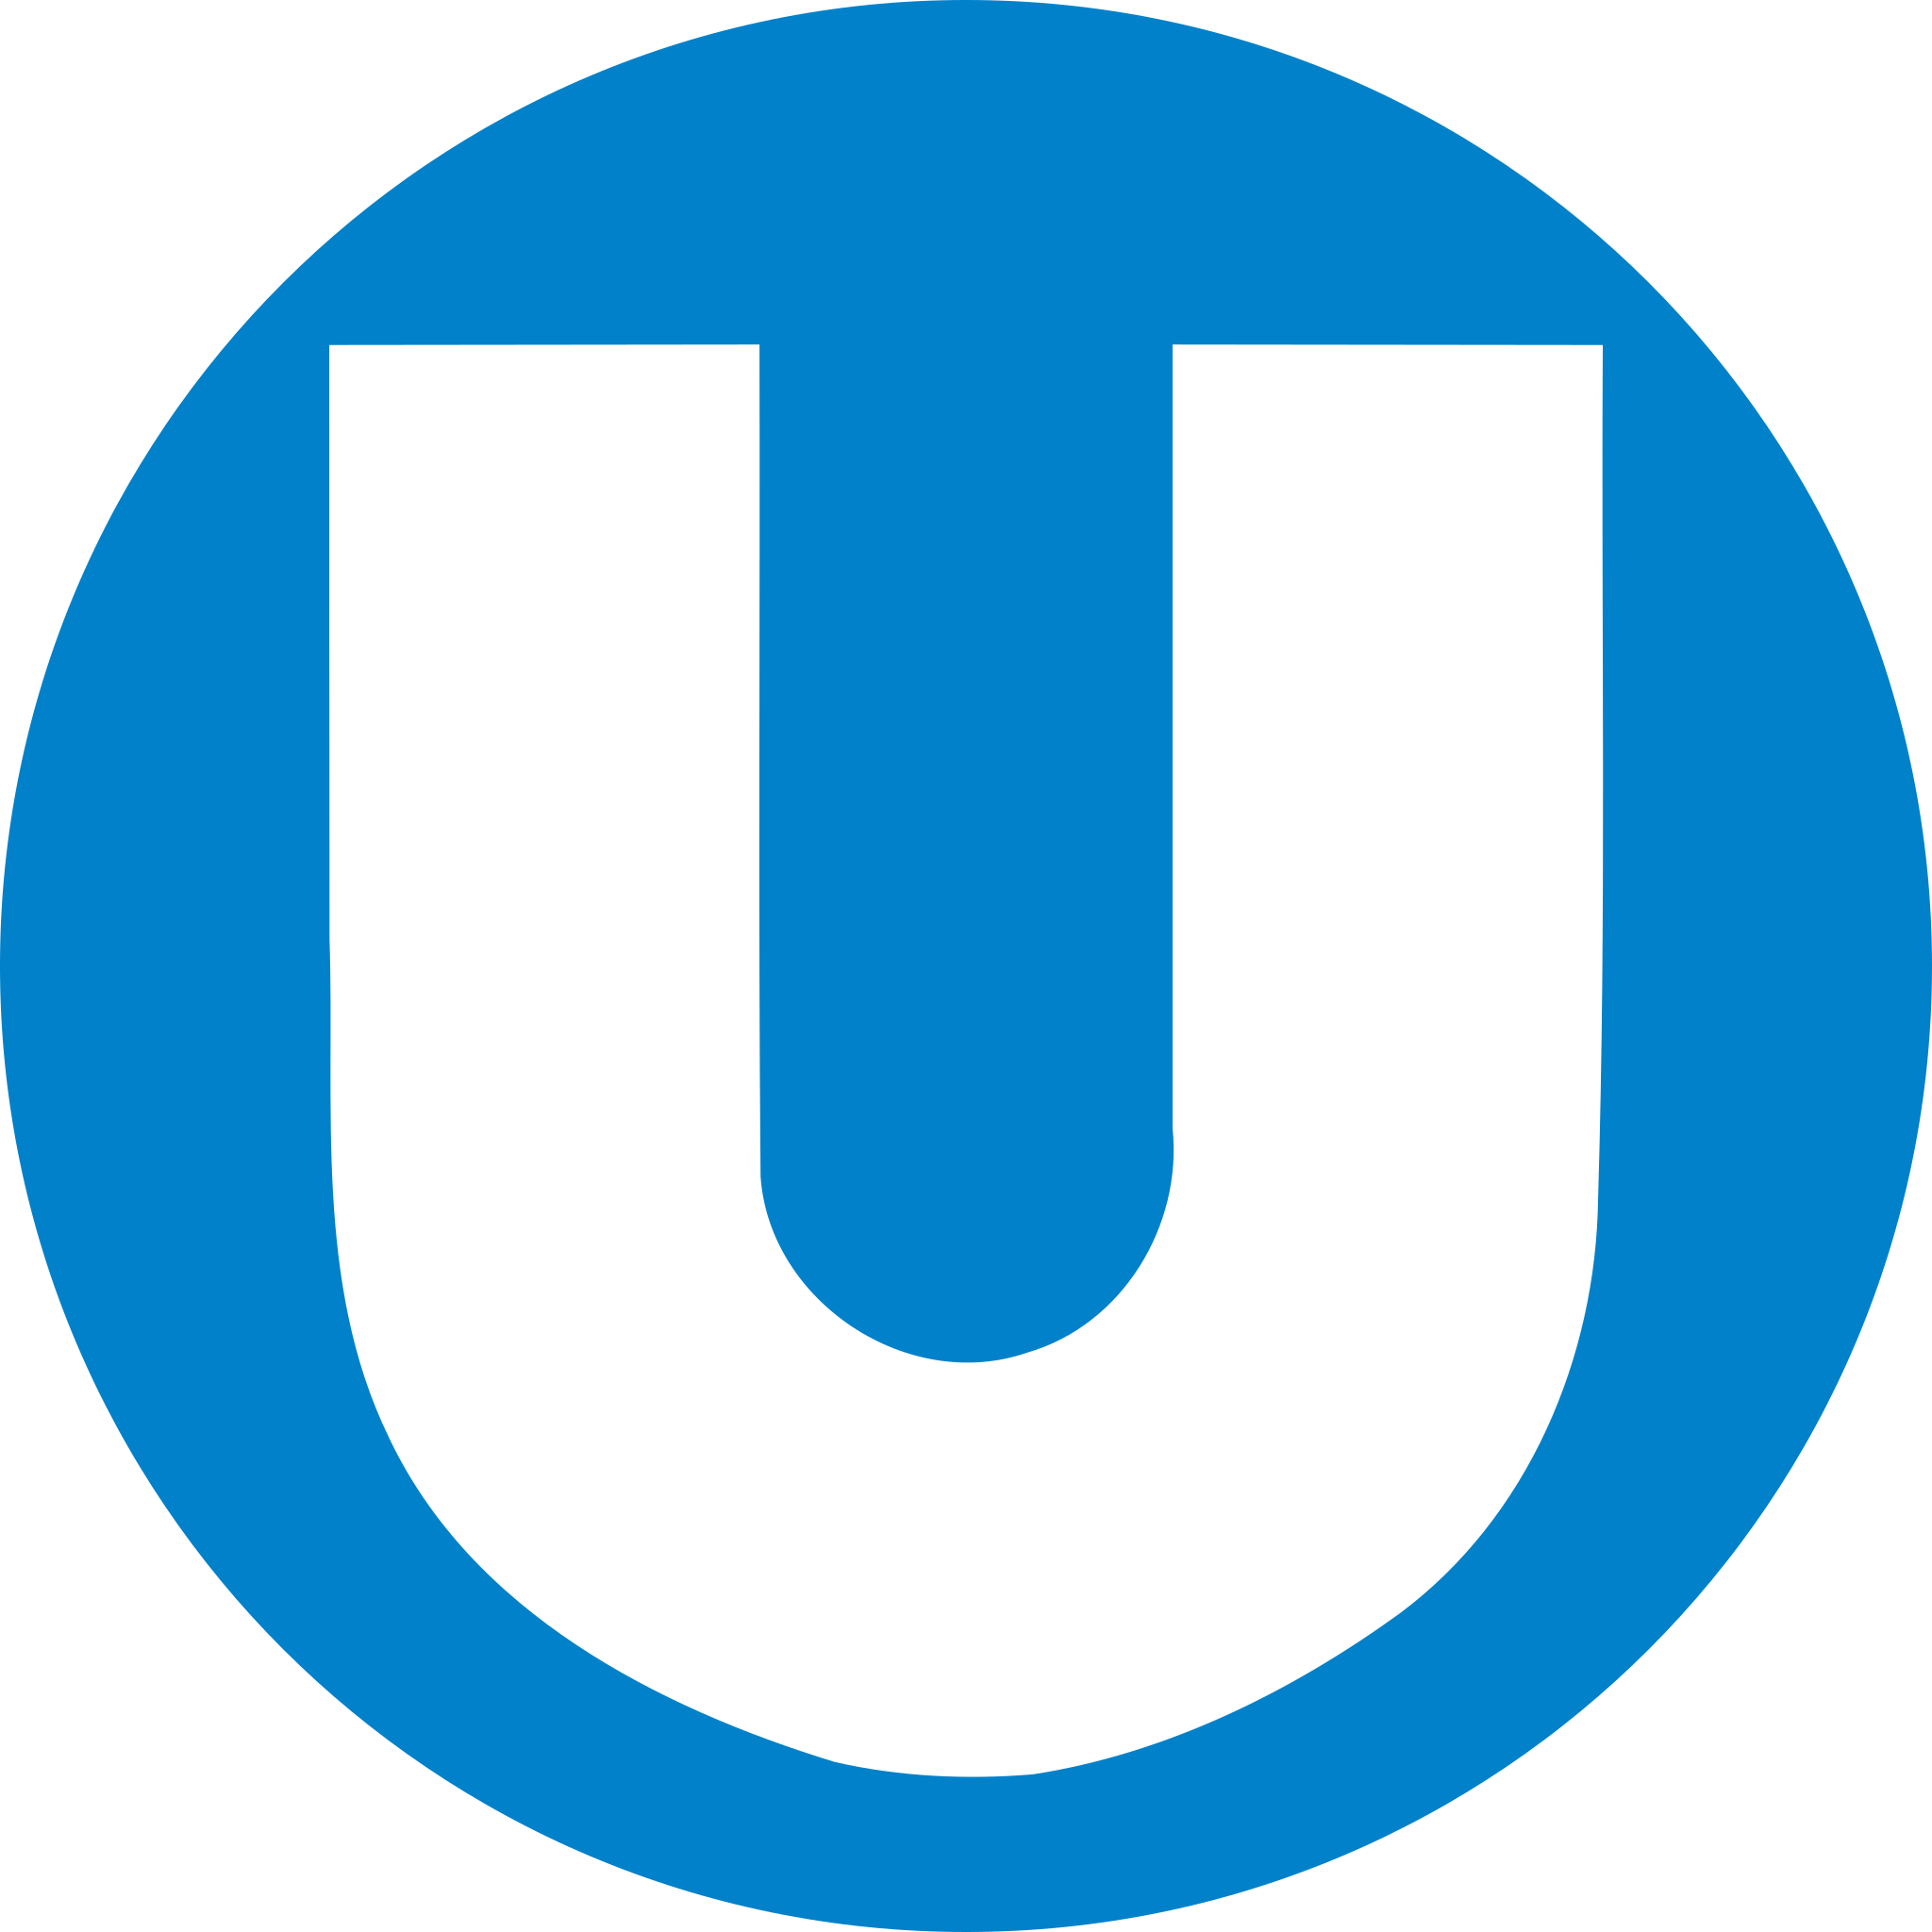 Frankfurt metro logo.